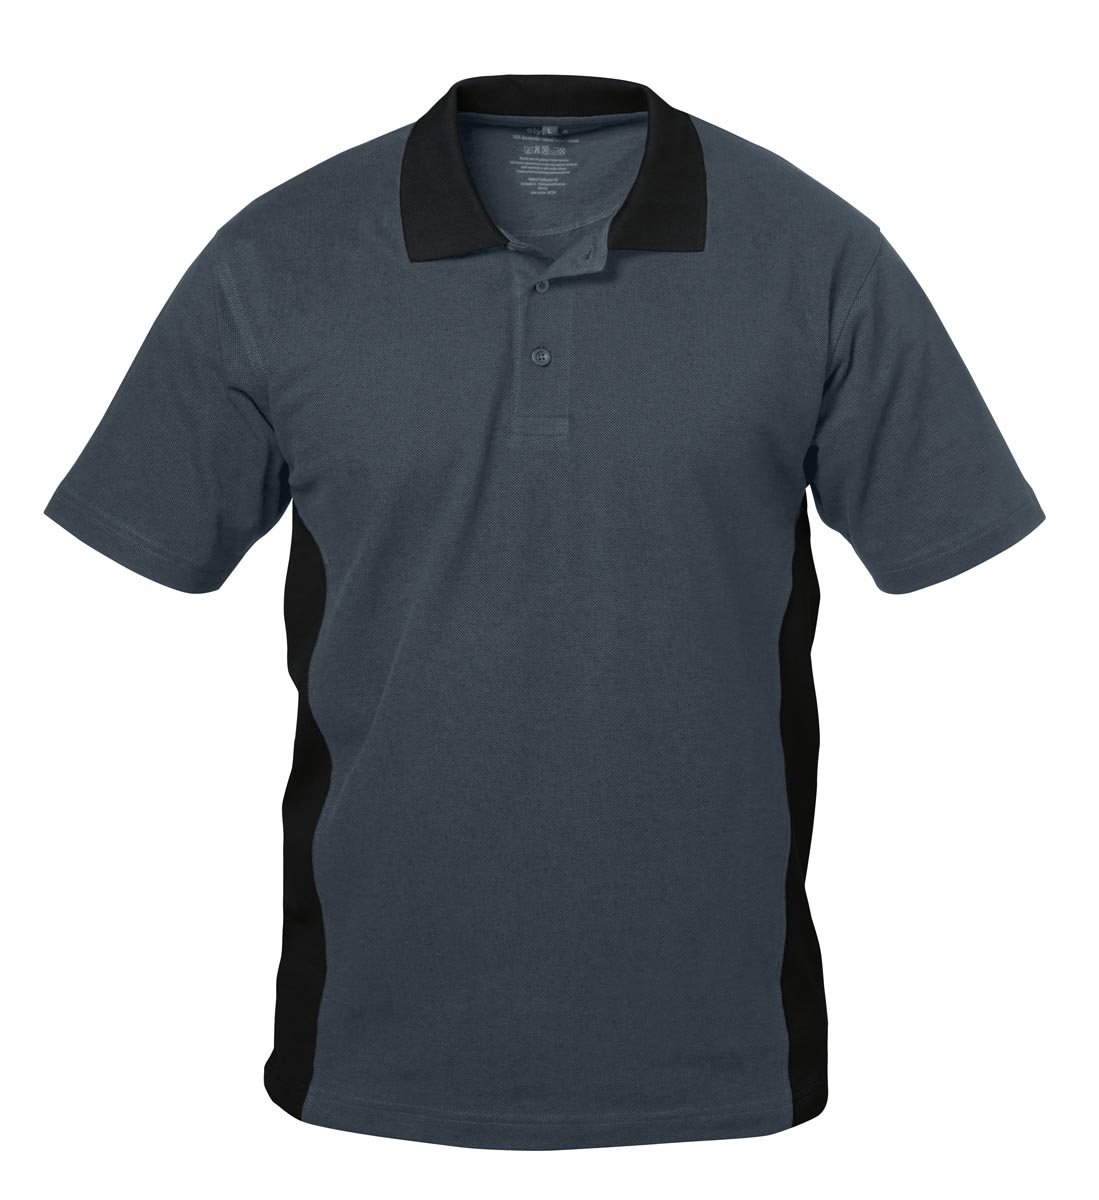 Elysee Polo Pique Shirt Granada grau schwarz